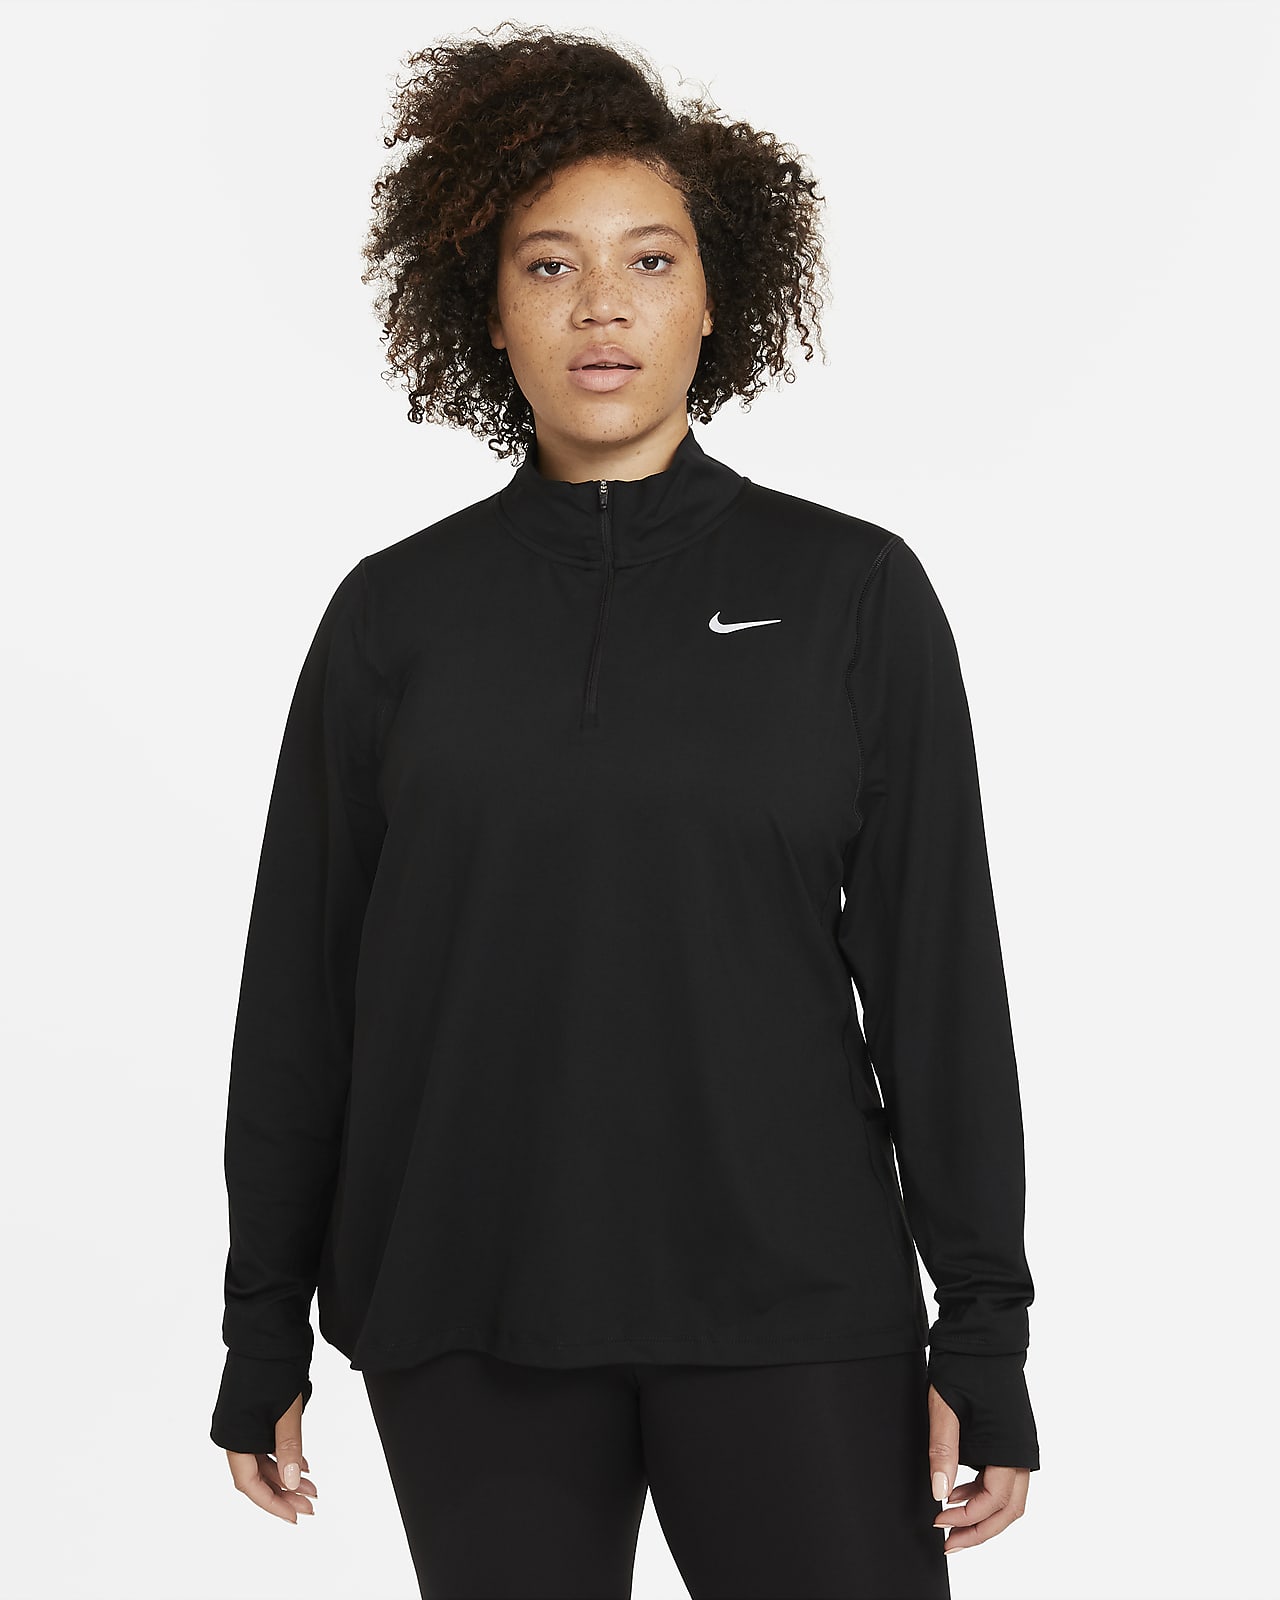 Nike Women's 1/2-Zip Running Top (Plus Size)